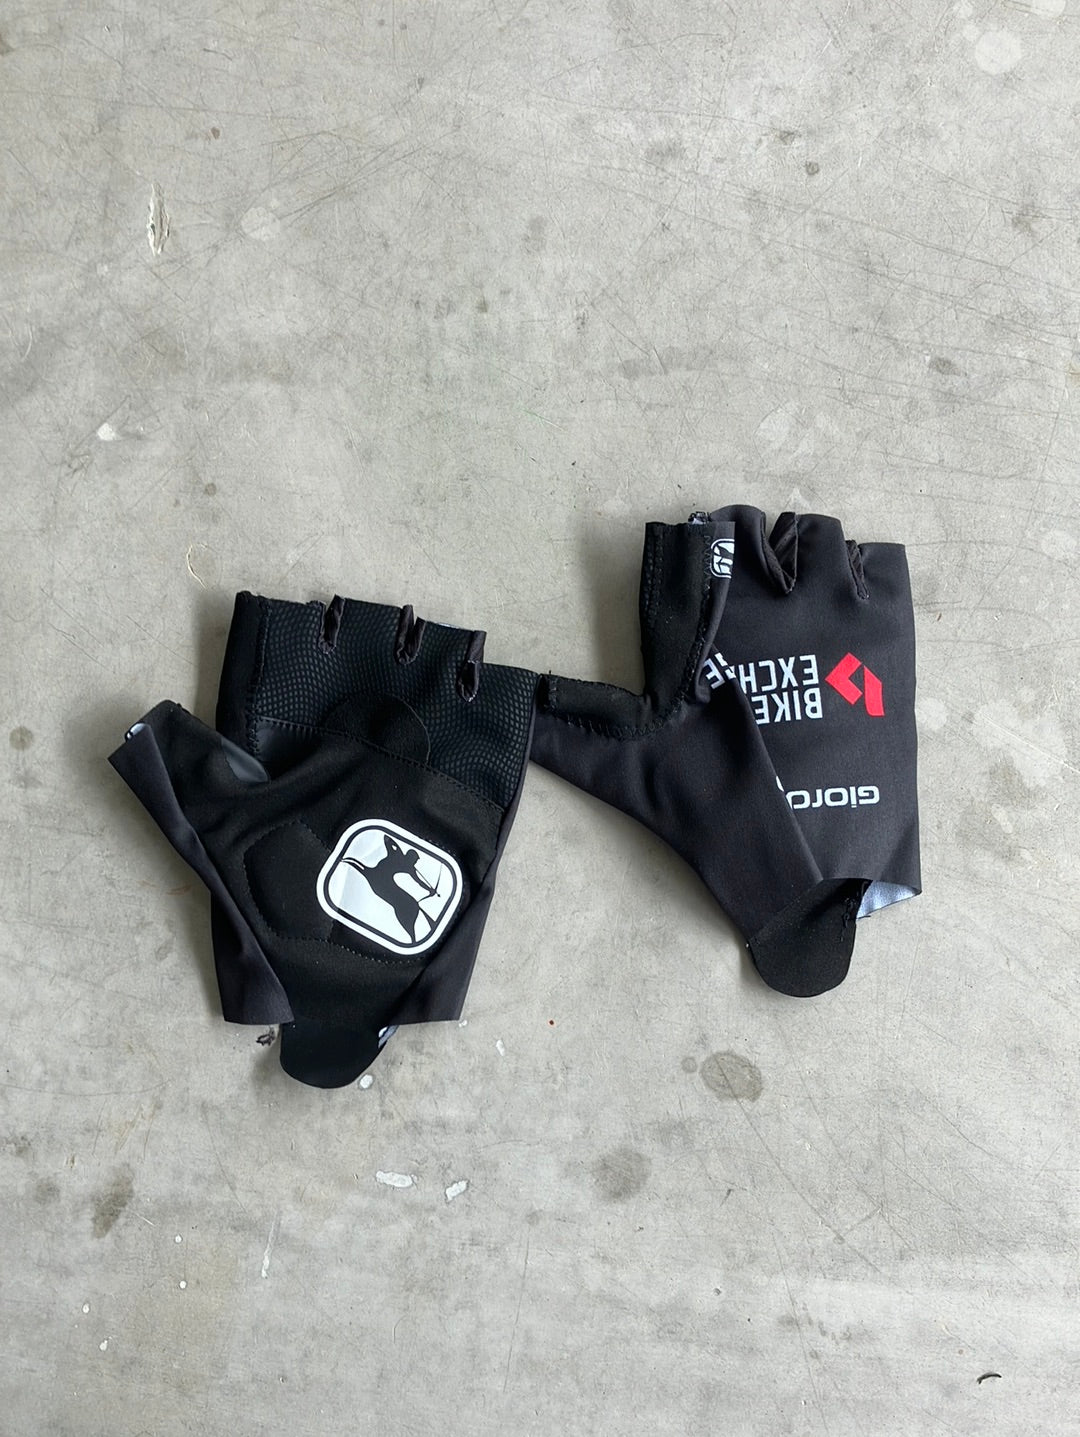 Padded Gloves / Mitts Summer Race | Giordana | Bianchi Bike Exchange | Pro Cycling Kit